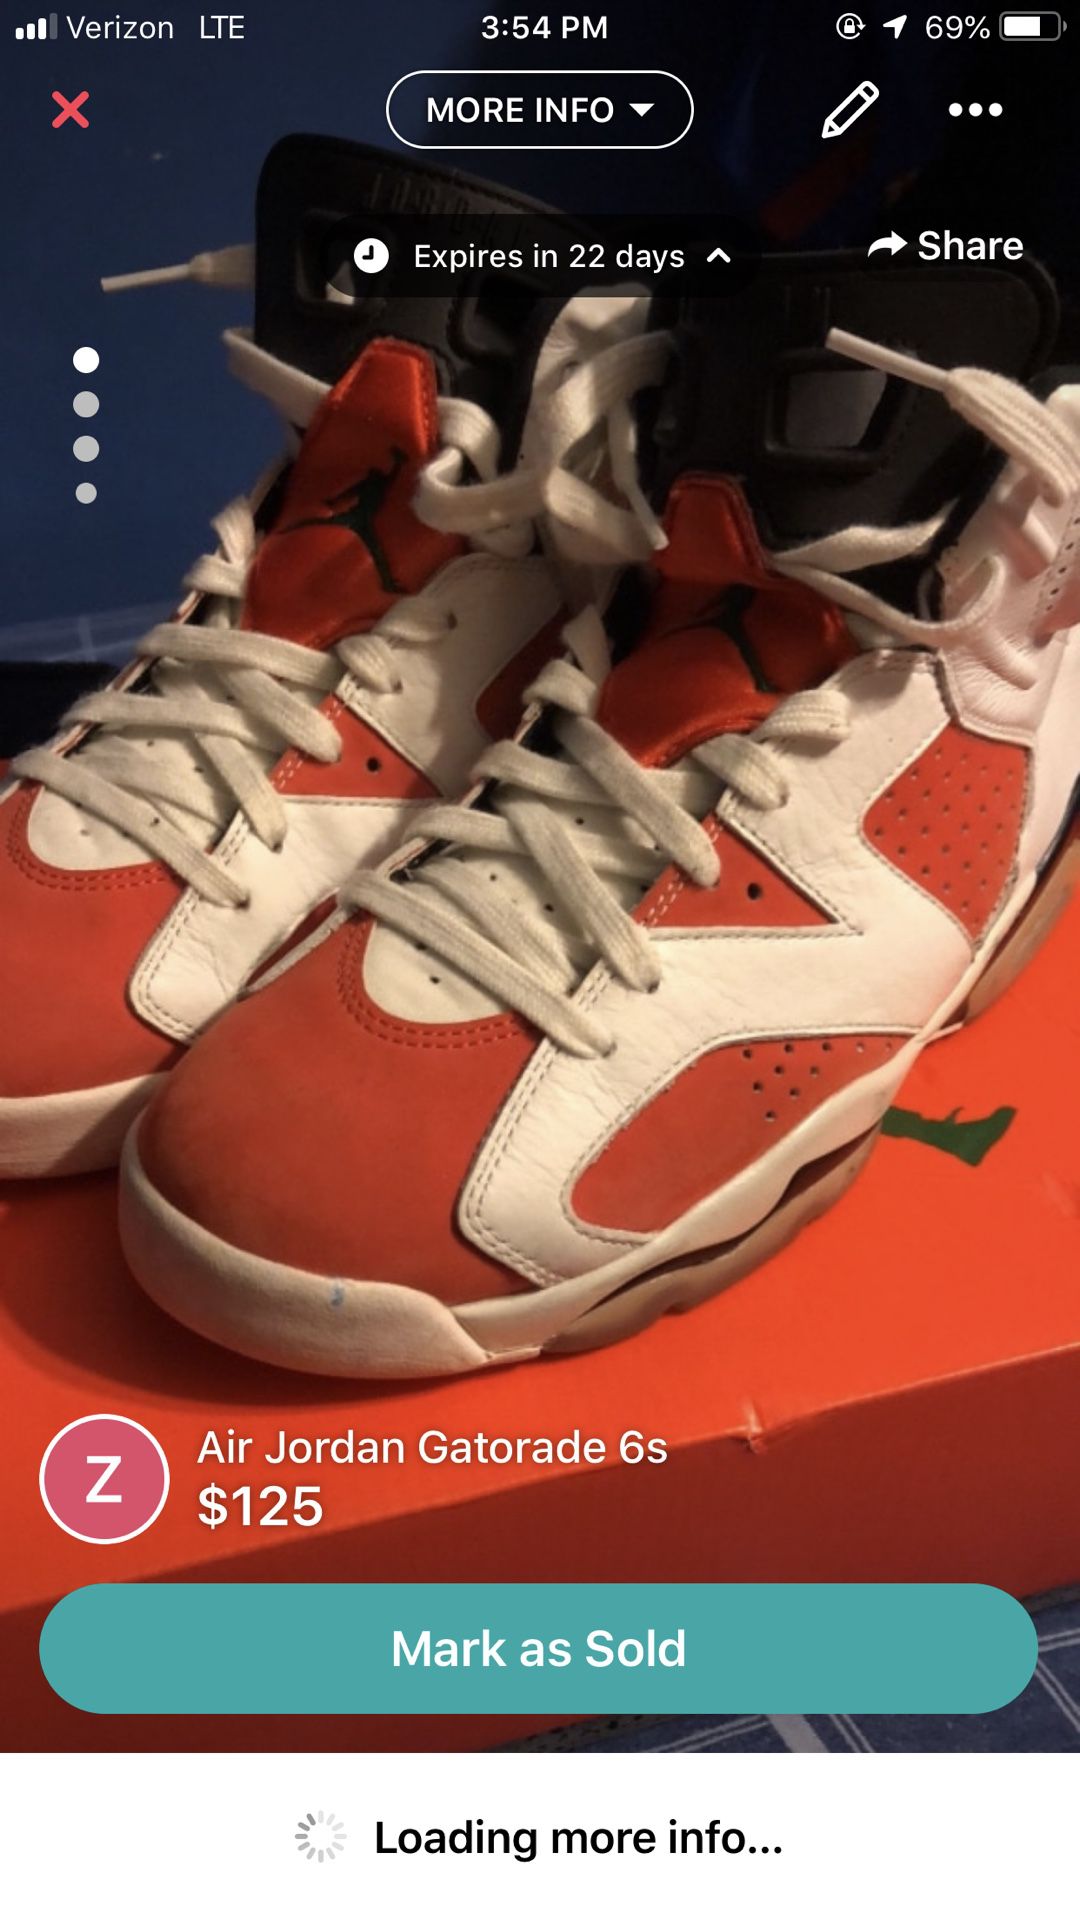 Air Jordan Gatorade 6s